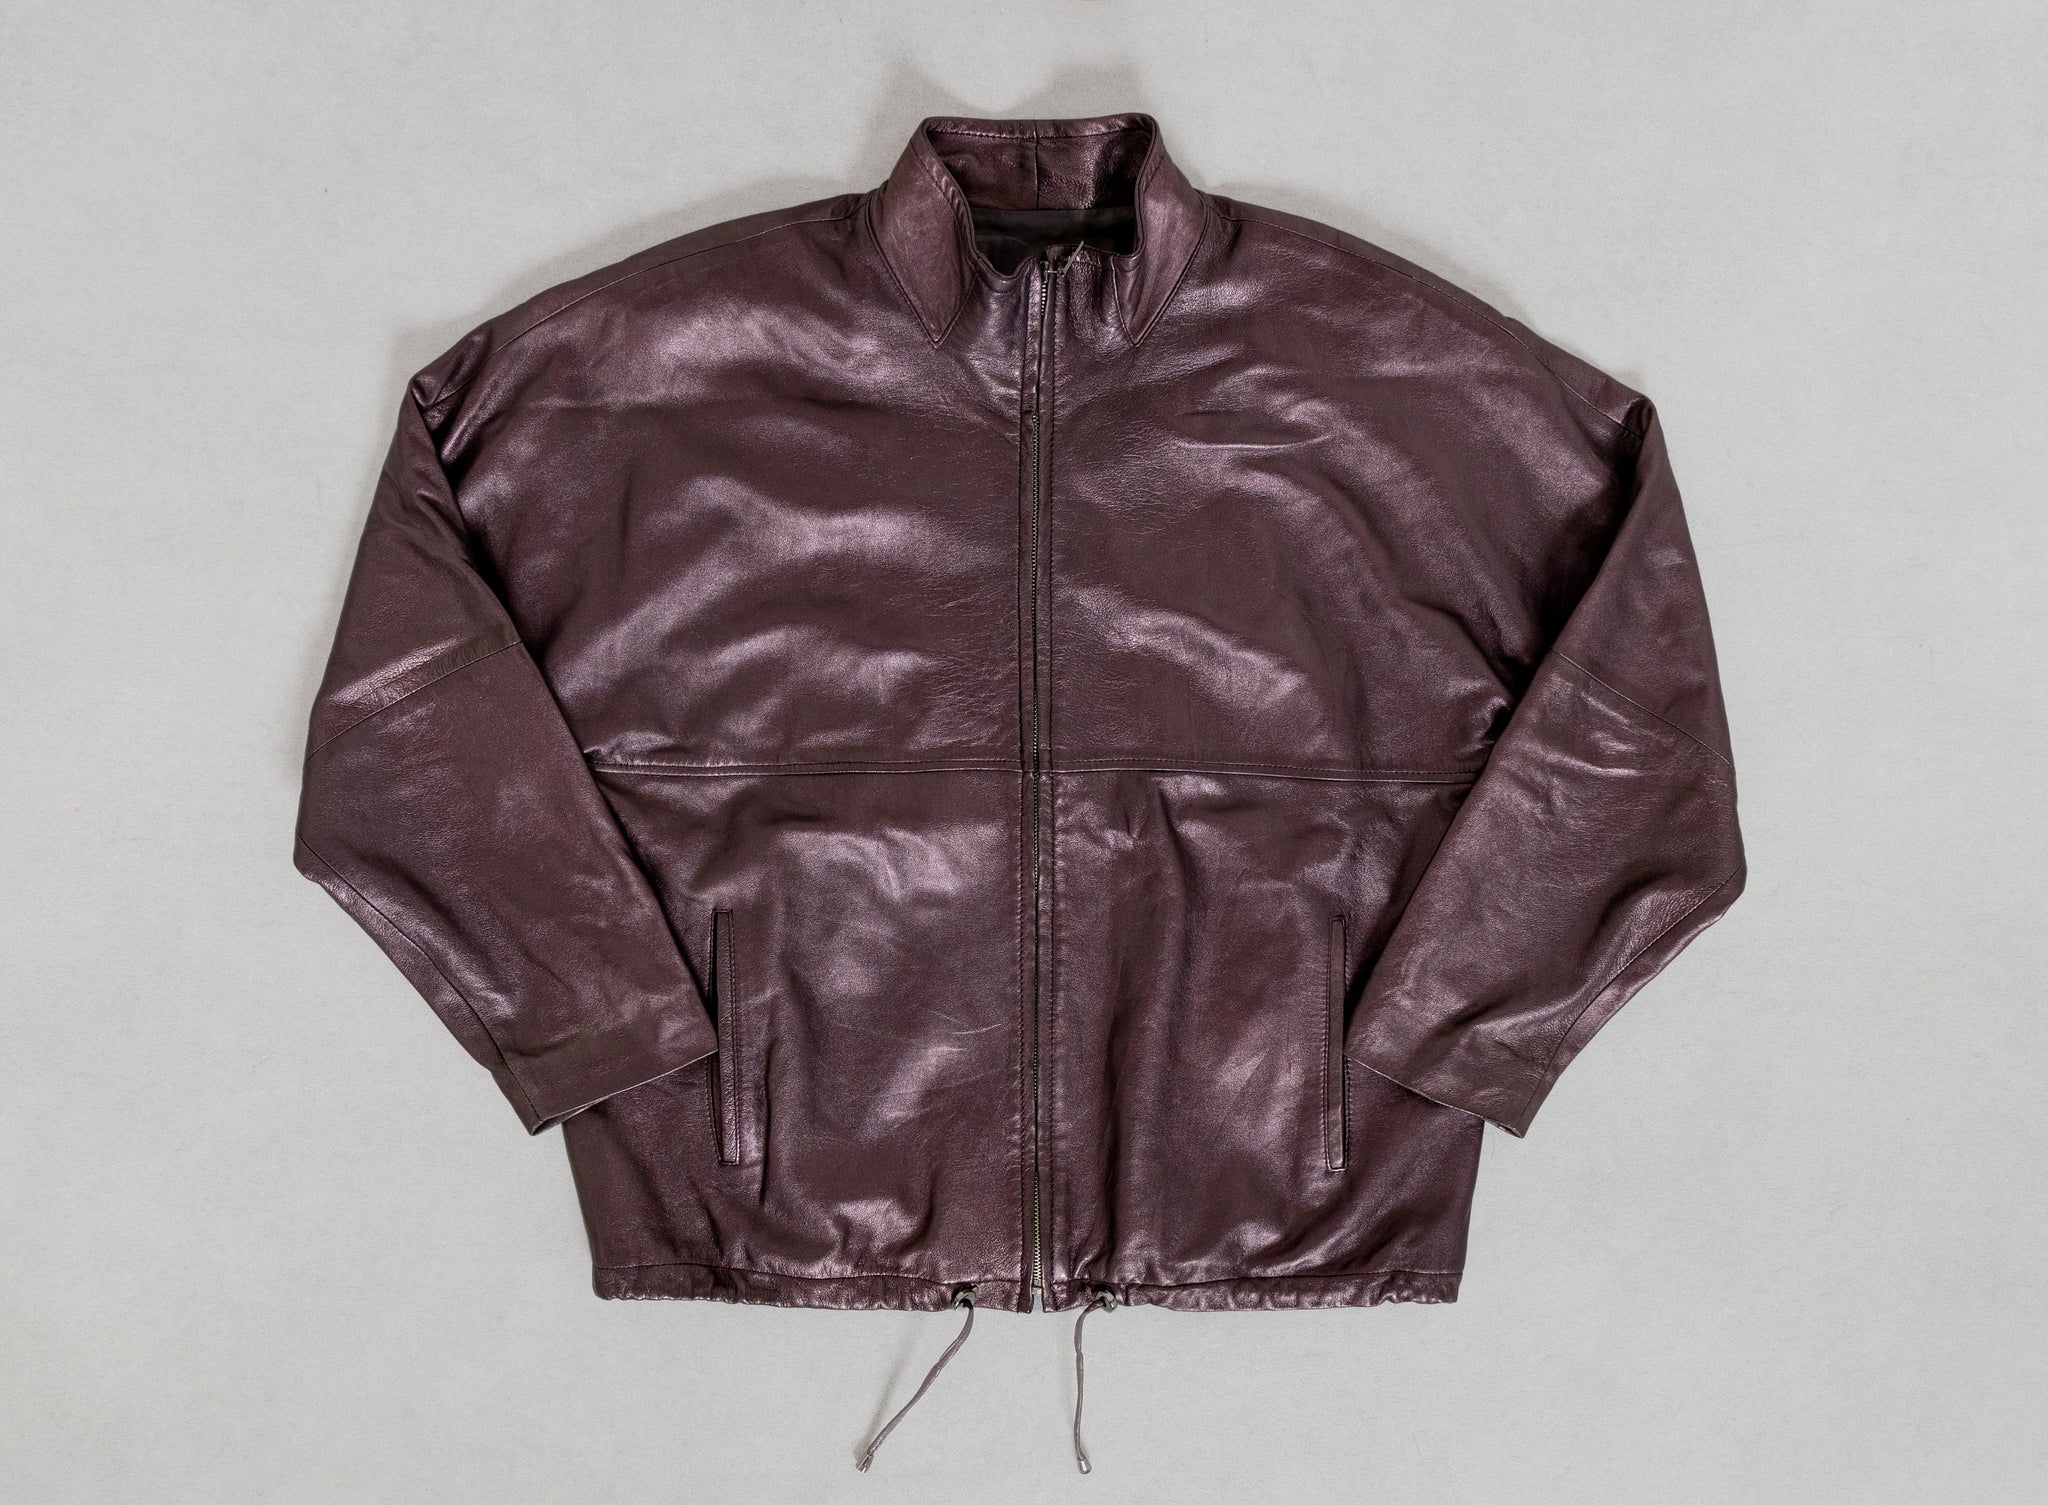 Iridescent Leather